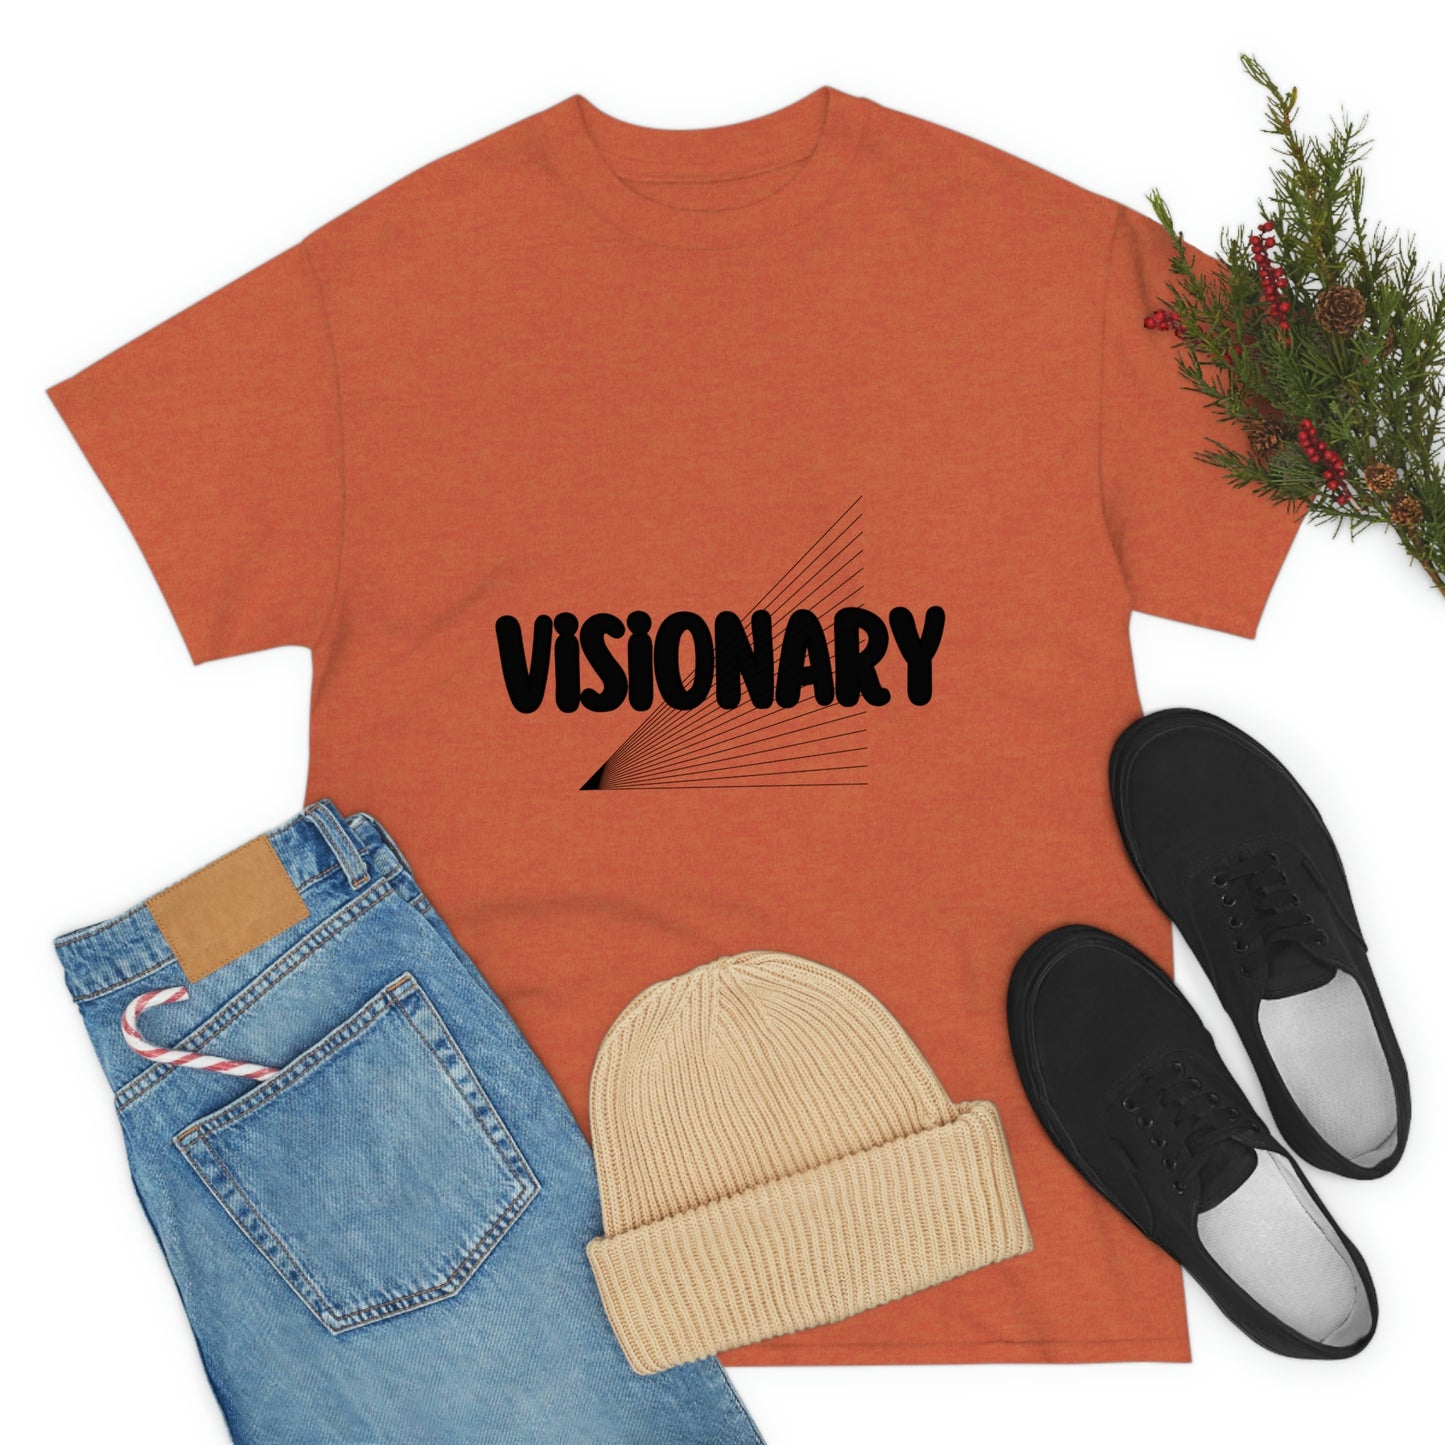 Visionary T-shirt